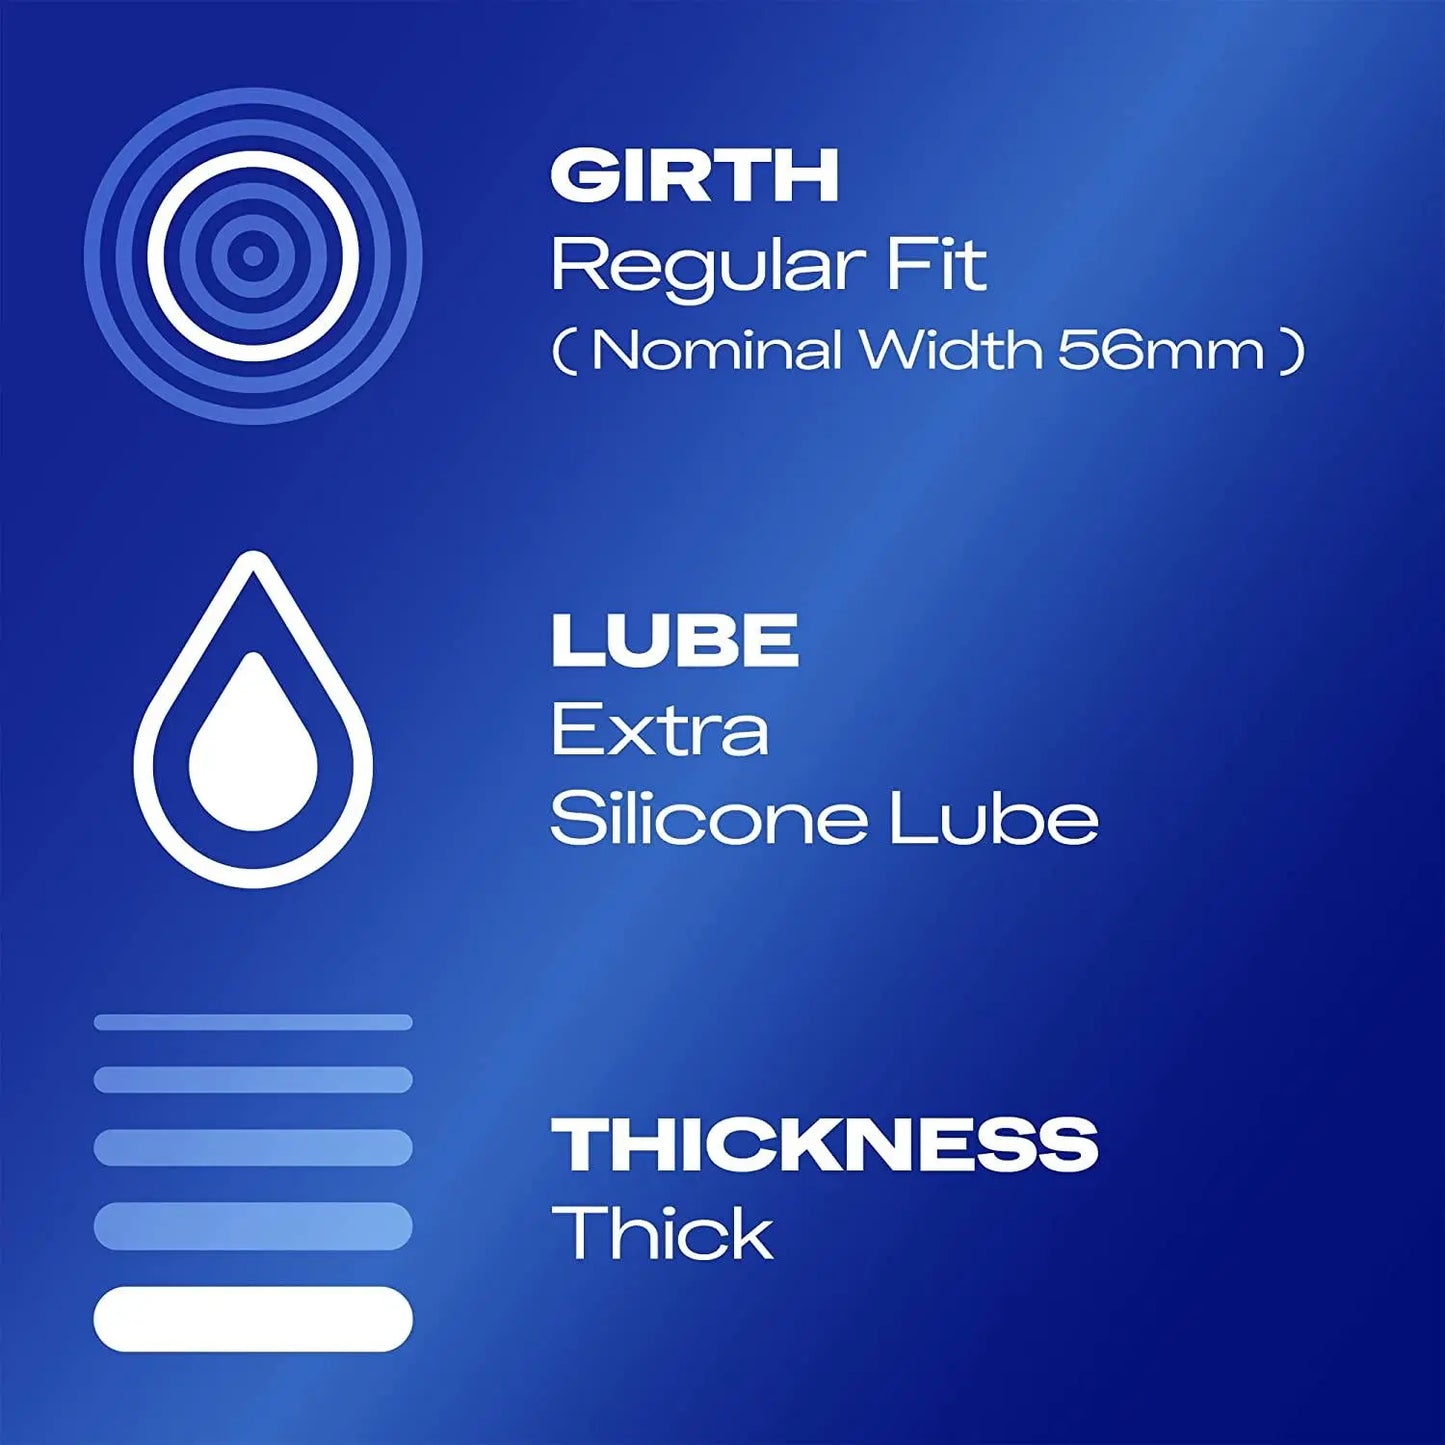 Durex Extra Safe Condoms Extra Lubricated Pack of 12